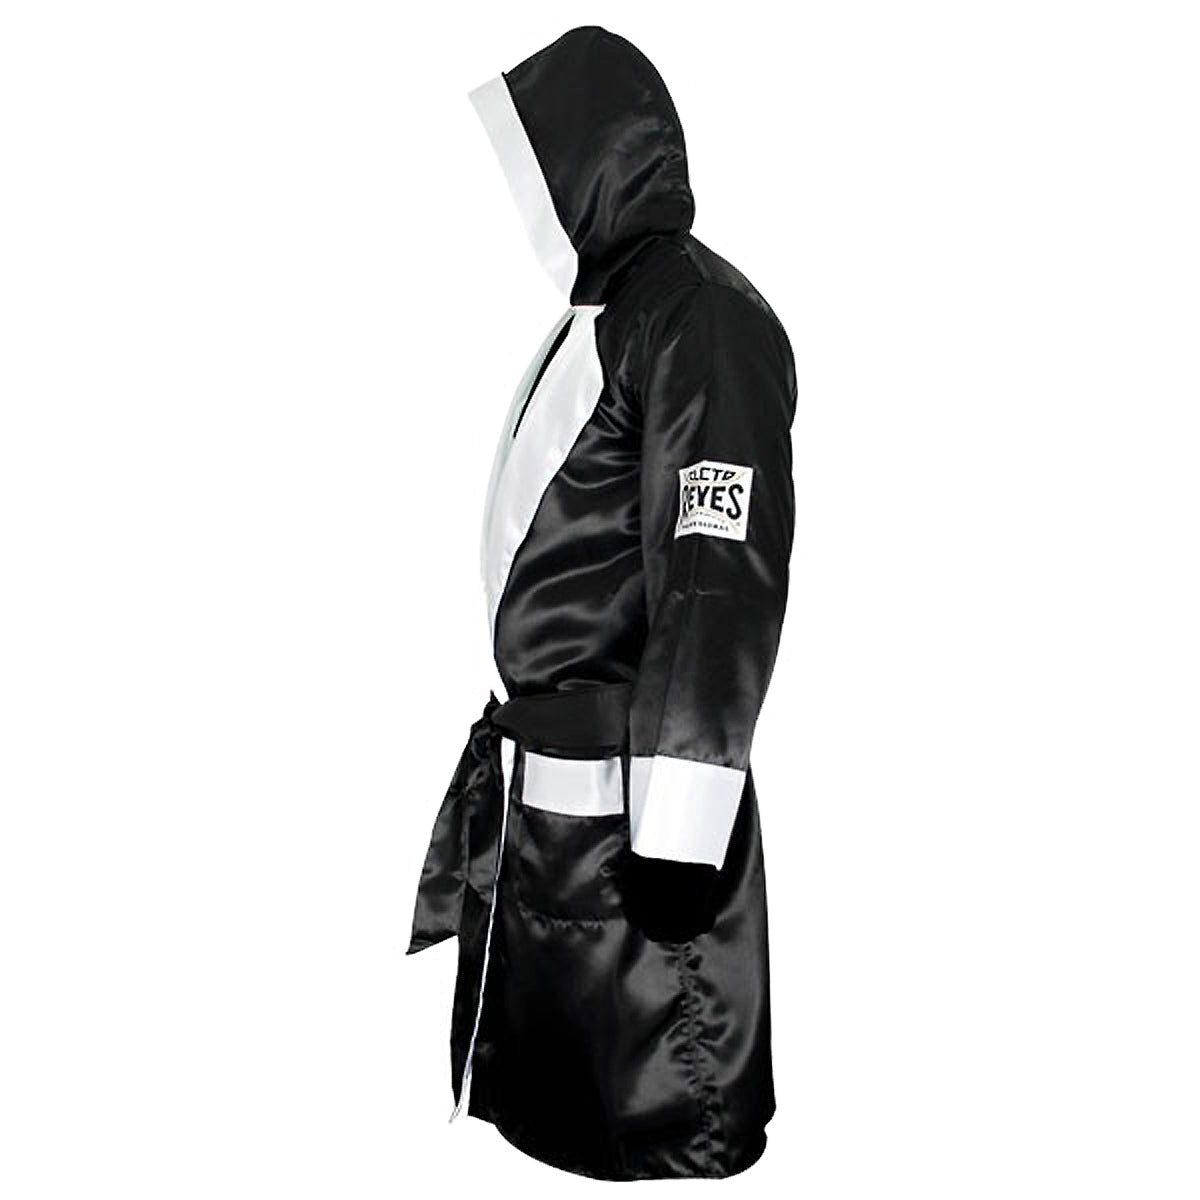 Cleto Reyes Satin Boxing Robe with Hood - Black/White Cleto Reyes